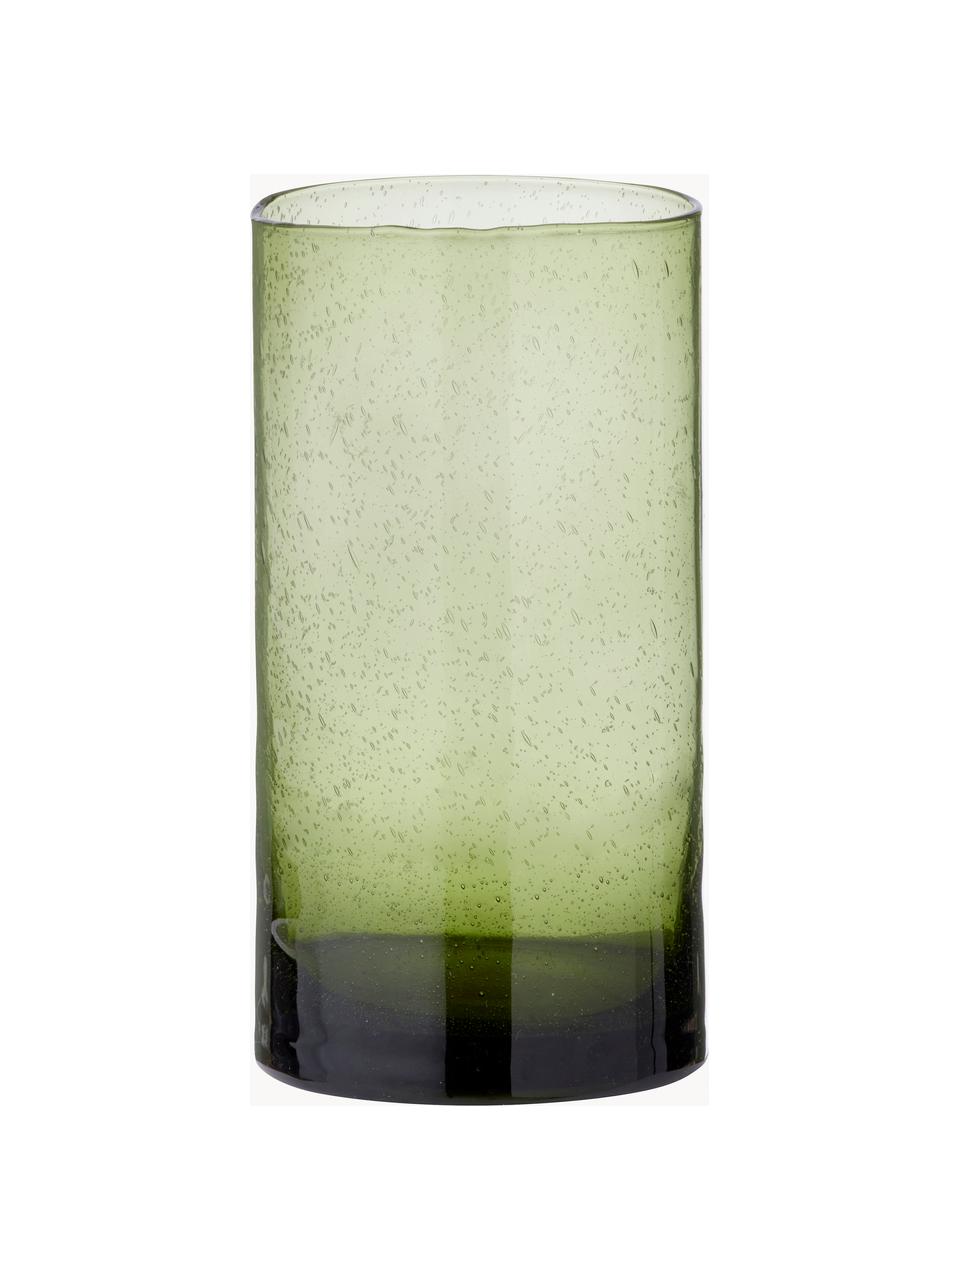 Vaso in vetro Salon alt. 21 cm, Vetro, Tonalità verdi, semi trasparente, Ø 11 x Alt. 21 cm